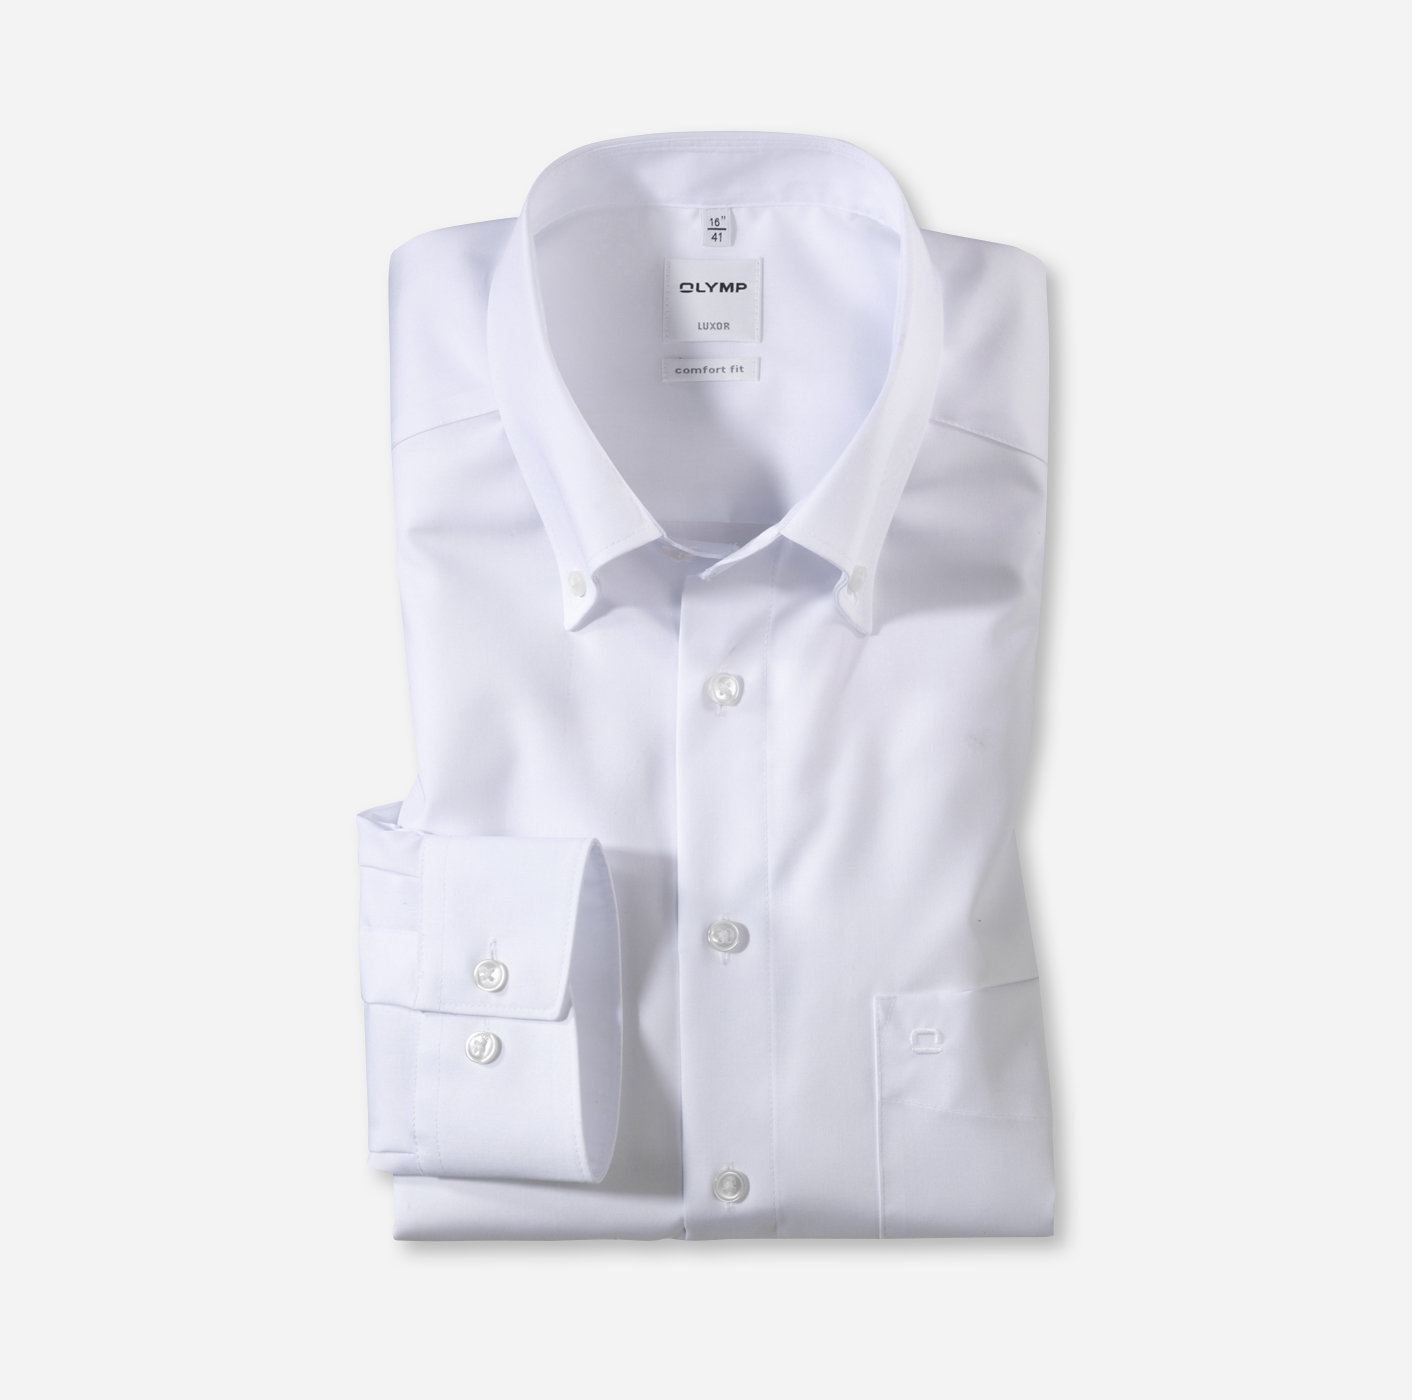 OLYMP Luxor, comfort fit, Business shirt, Pointes boutonnées, Blanc